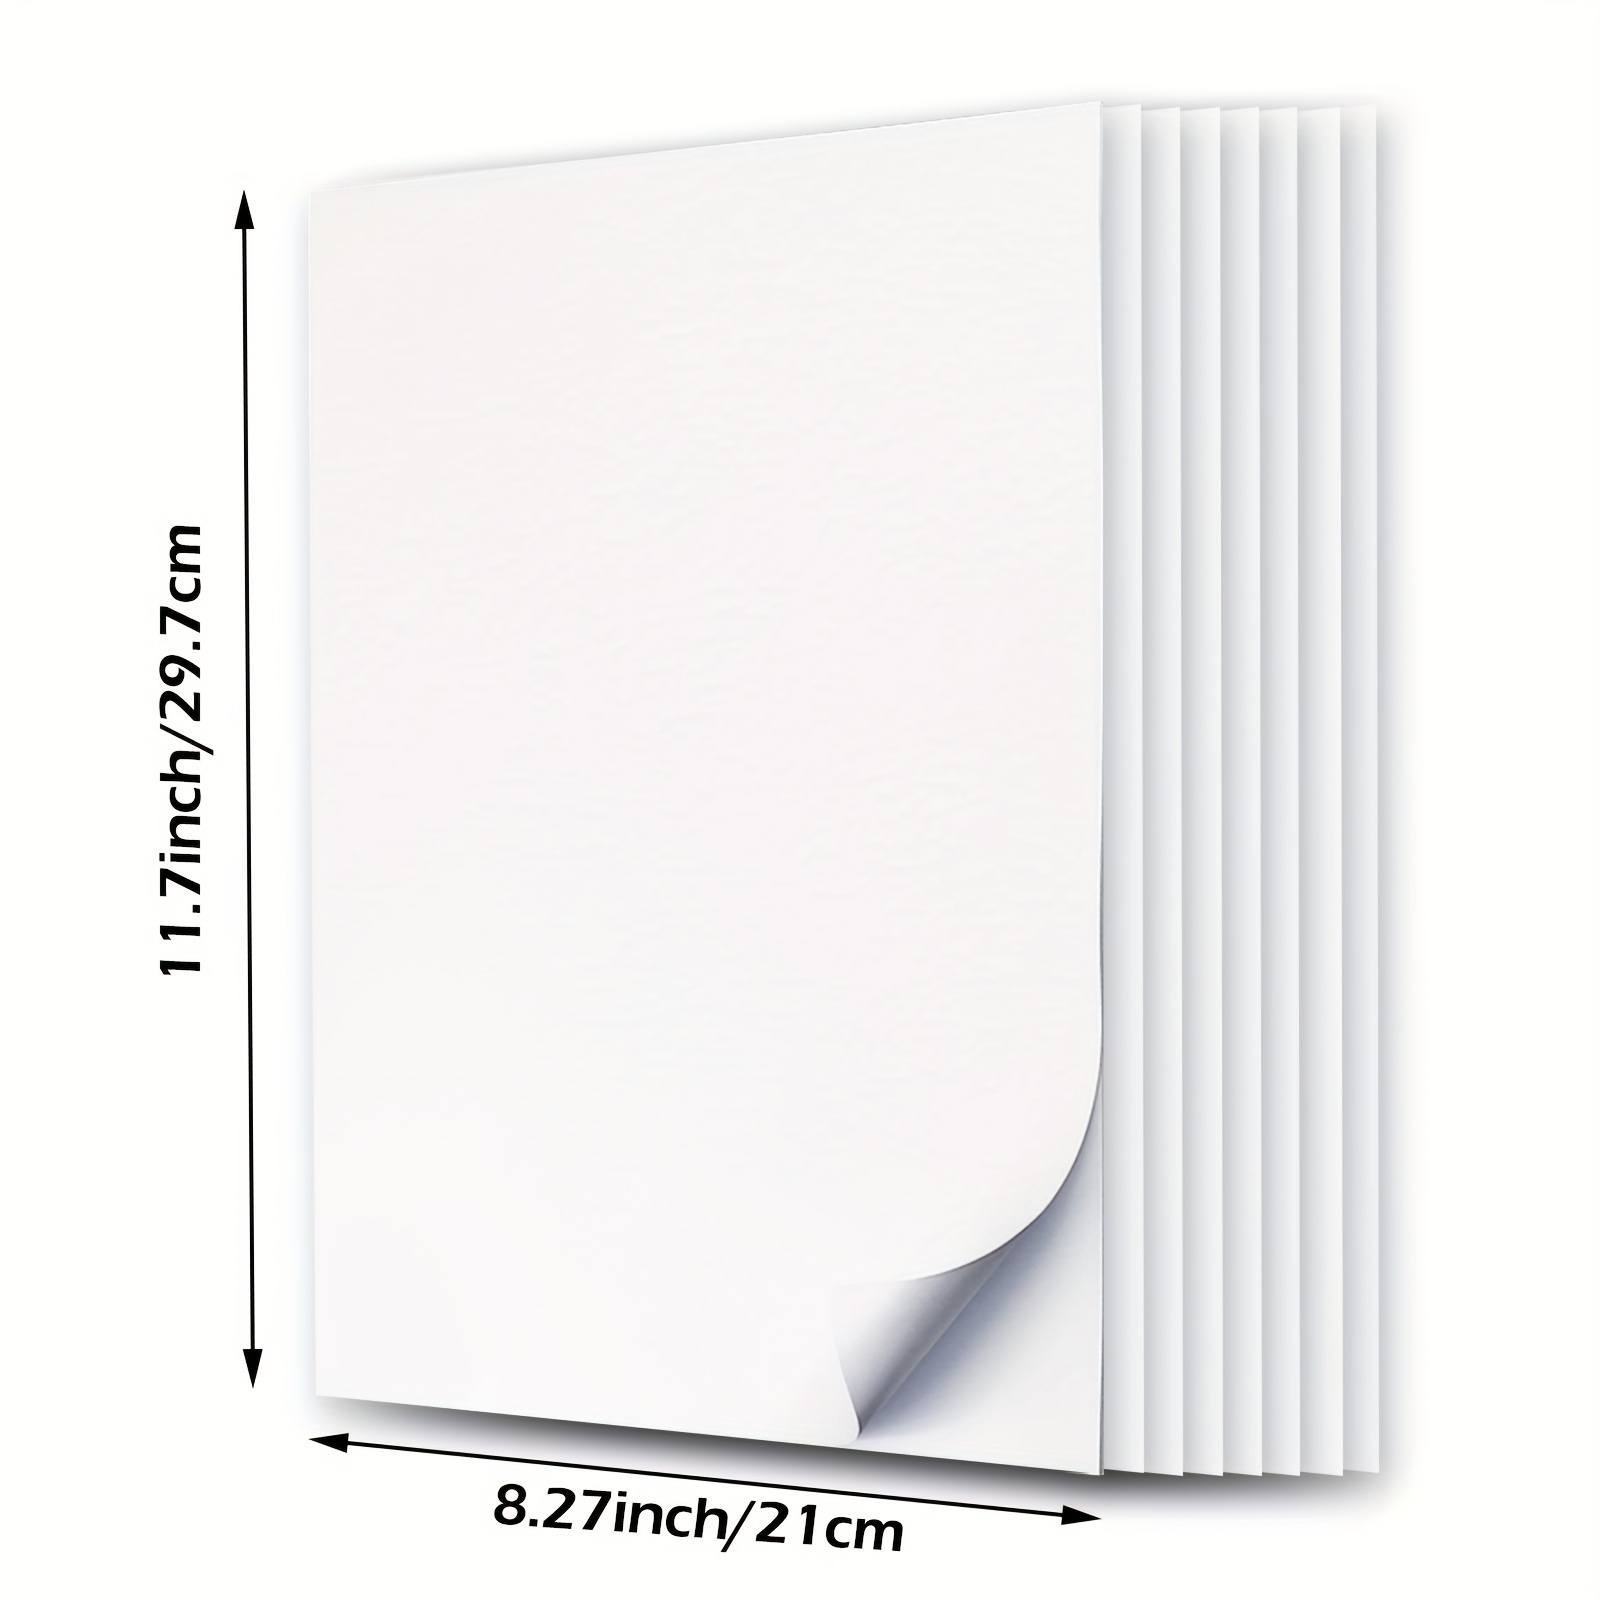 Printable Vinyl for Inkjet Printer, 20 Sheets Premium Glossy White Waterproof Printable Vinyl Paper,8.3x 11.7